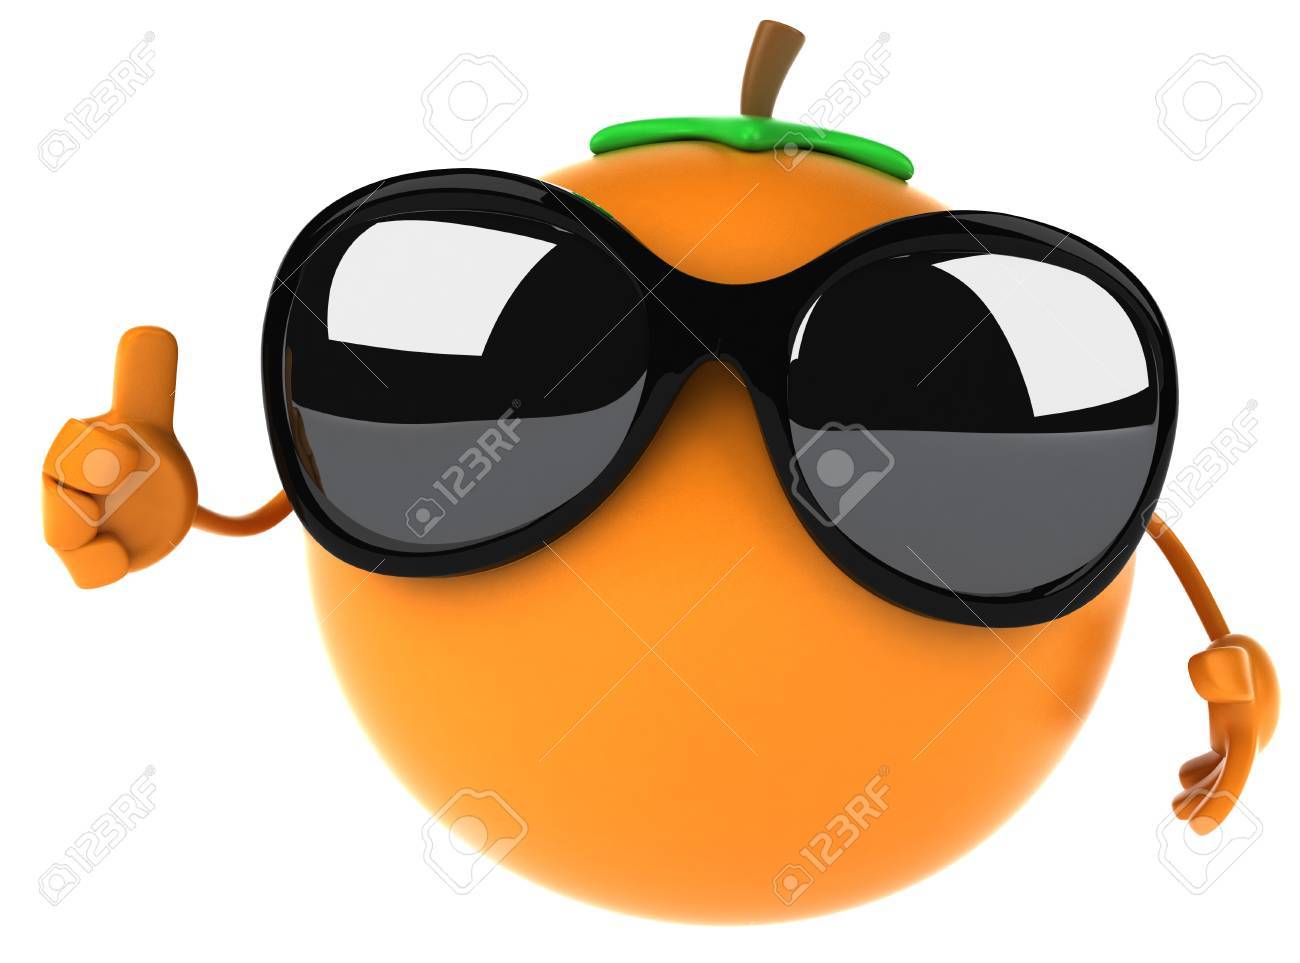 82868767-cartoon-orange-with-sunglasses-showing-thumbs-up.jpg